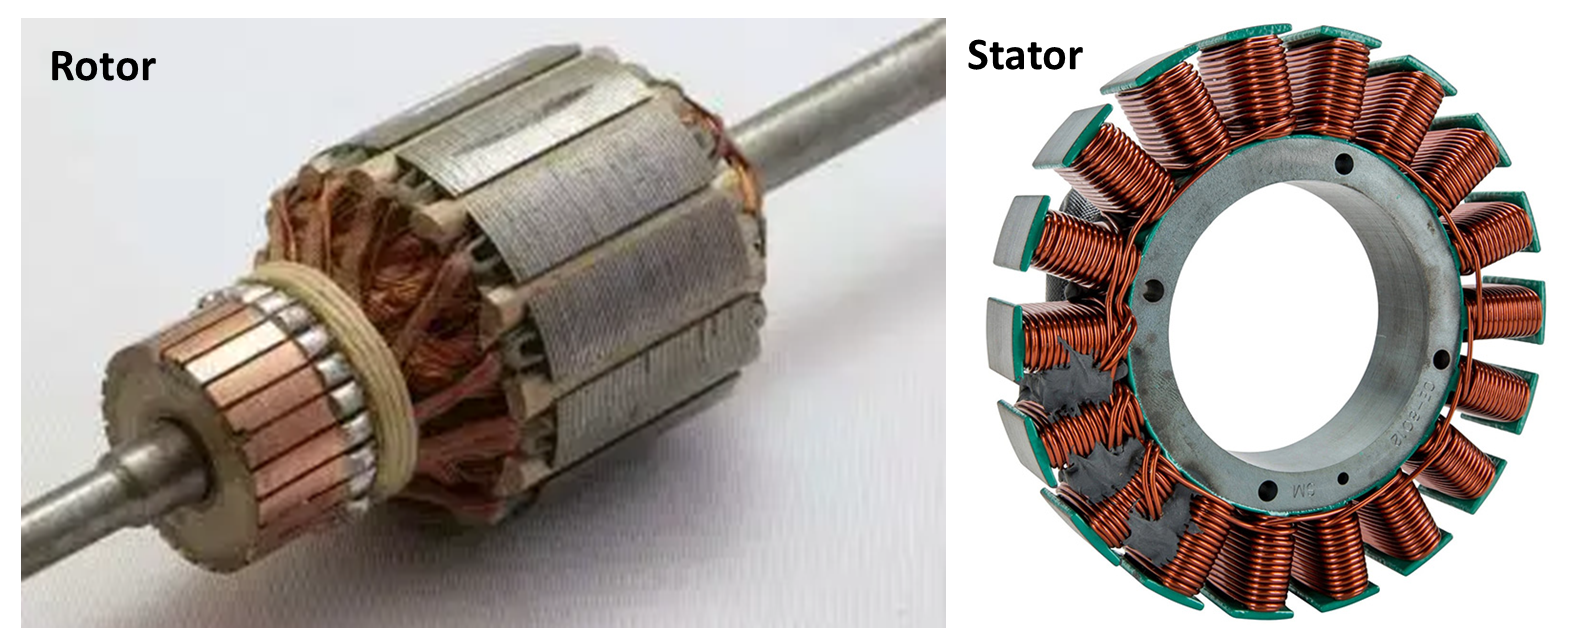 Rotor and Stator